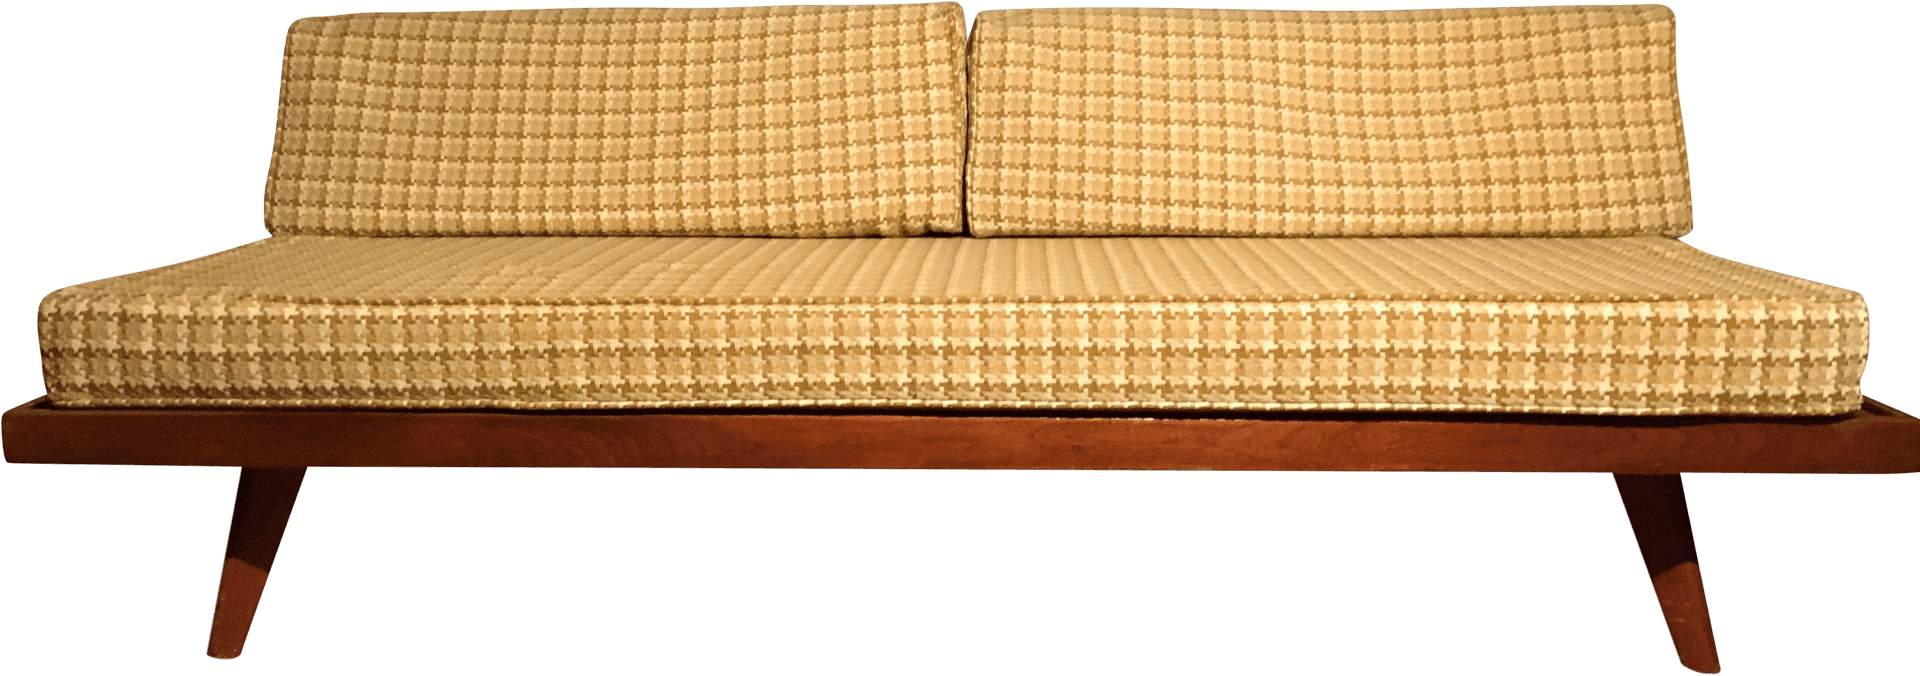 Mid Century Modern Yellow Sofa PNG